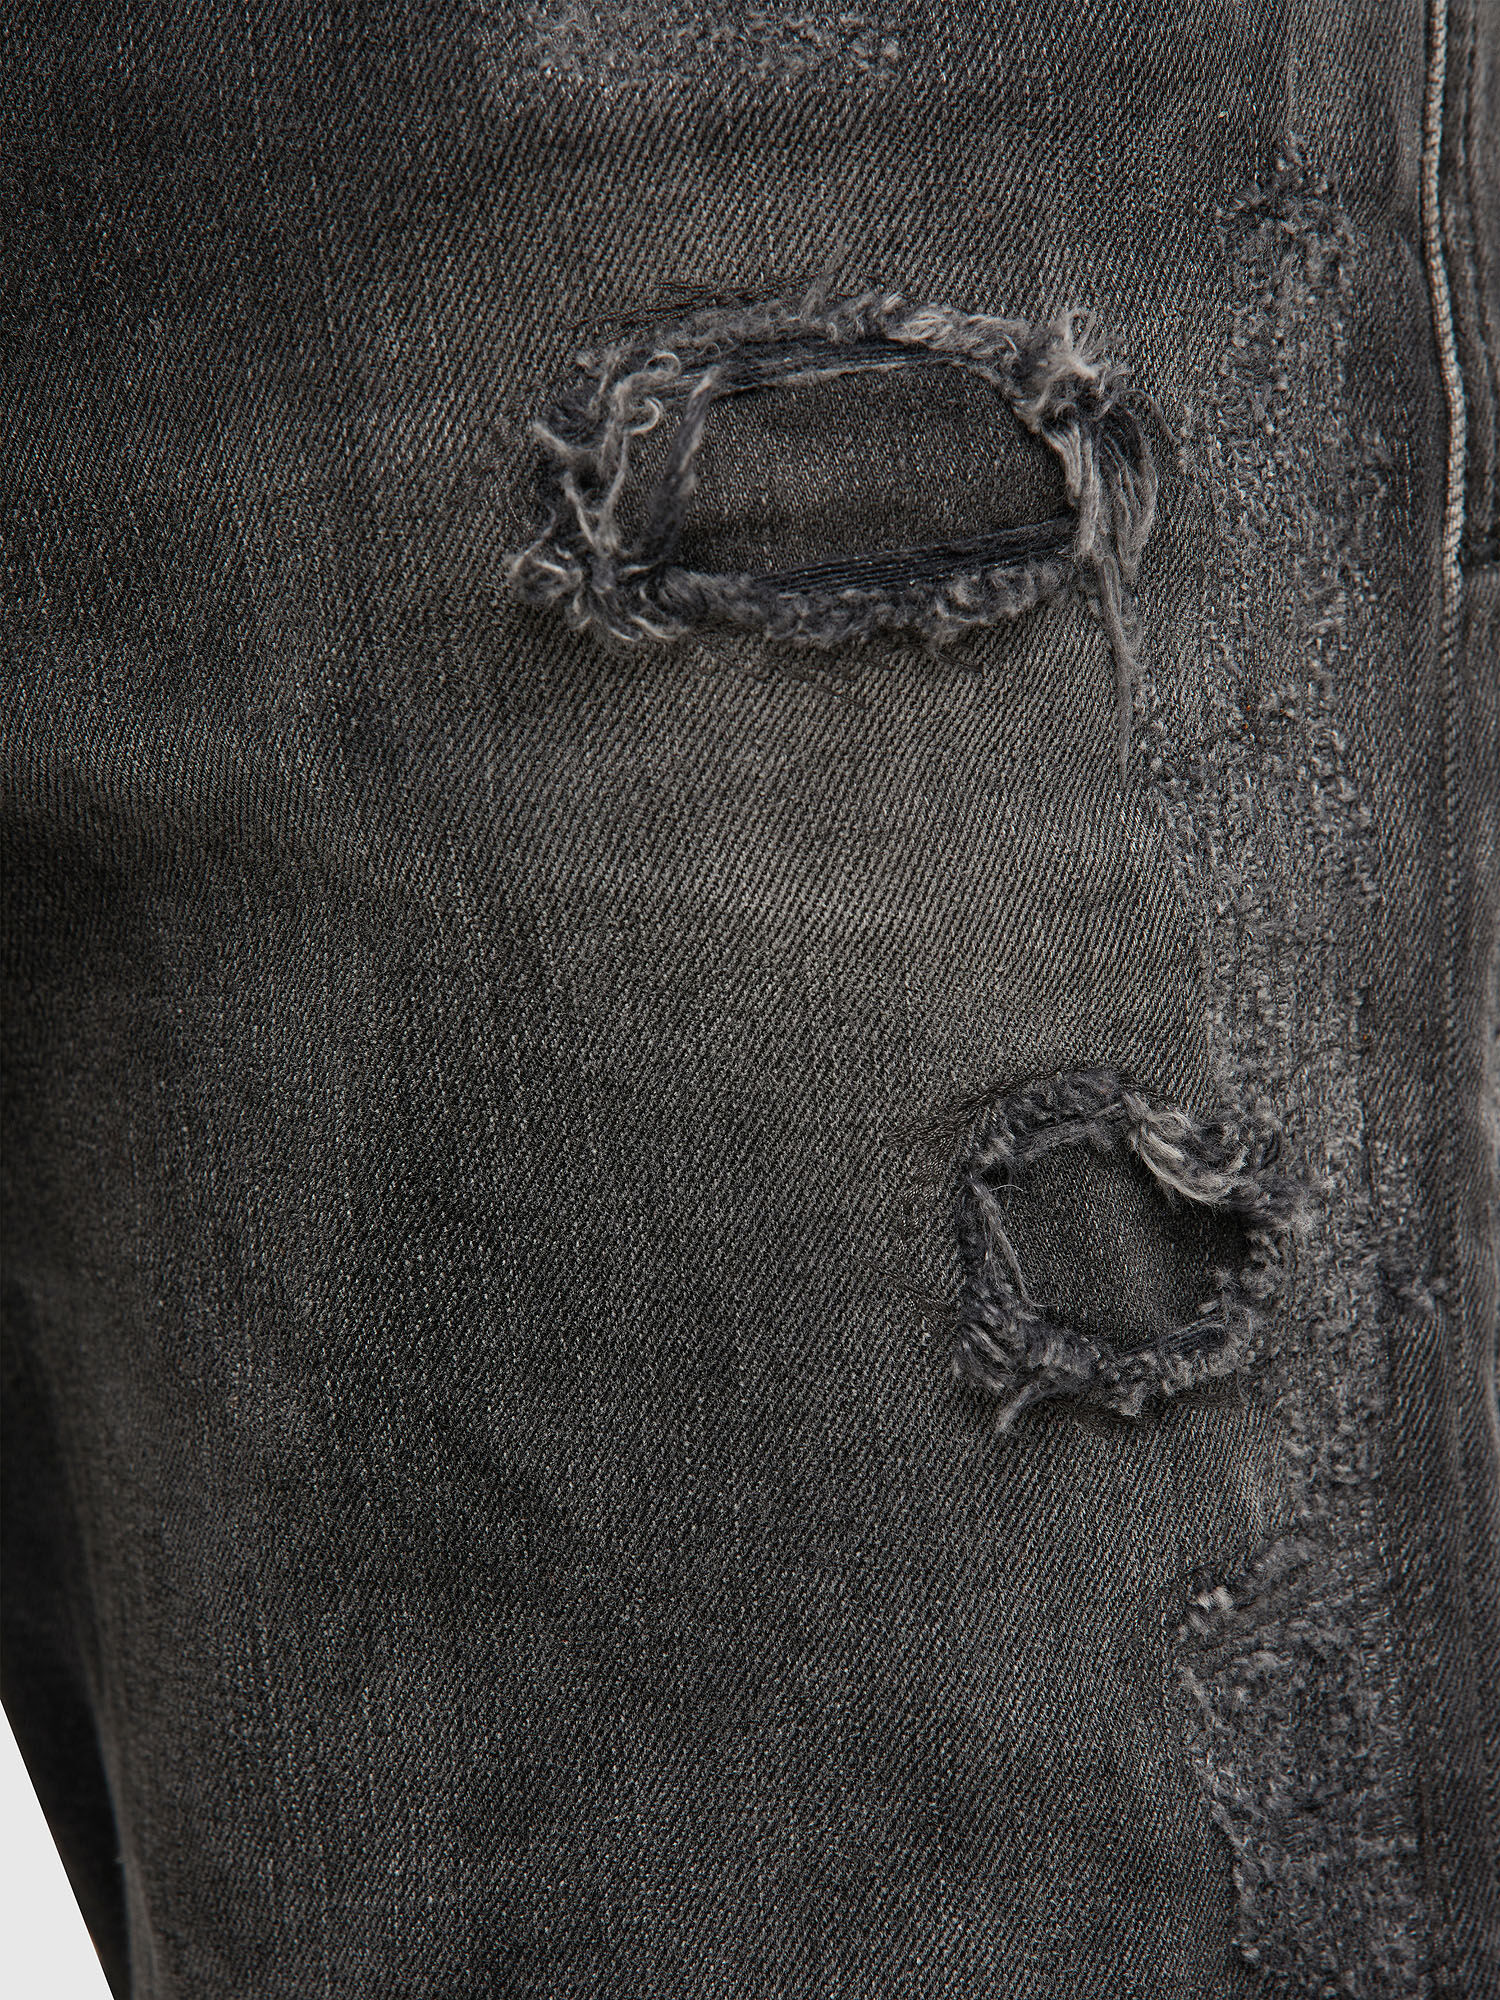 D-Strukt Slim Jeans 069RC: Dark Blue Wash, Treated, Stretch Fabric